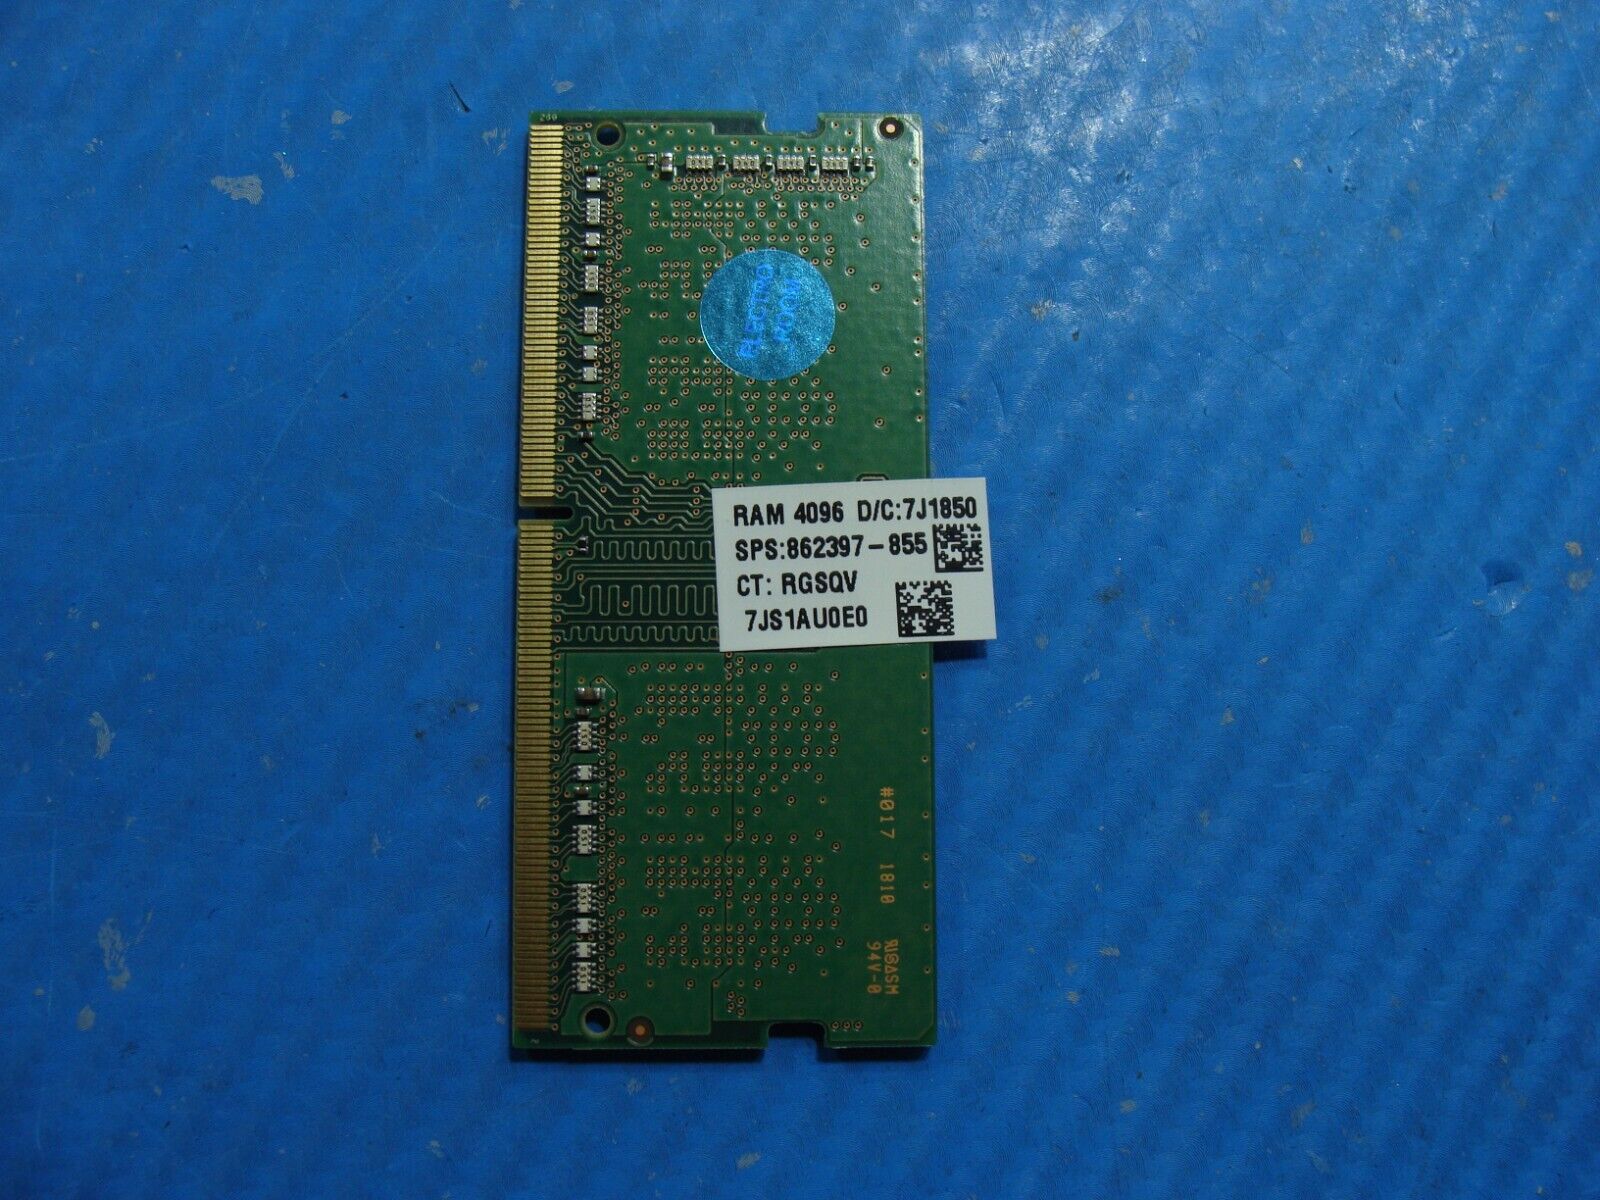 HP 15-bs234wm Samsung 4GB 1Rx16 PC4-2400T Memory RAM SO-DIMM M471A5244CB0-CRC